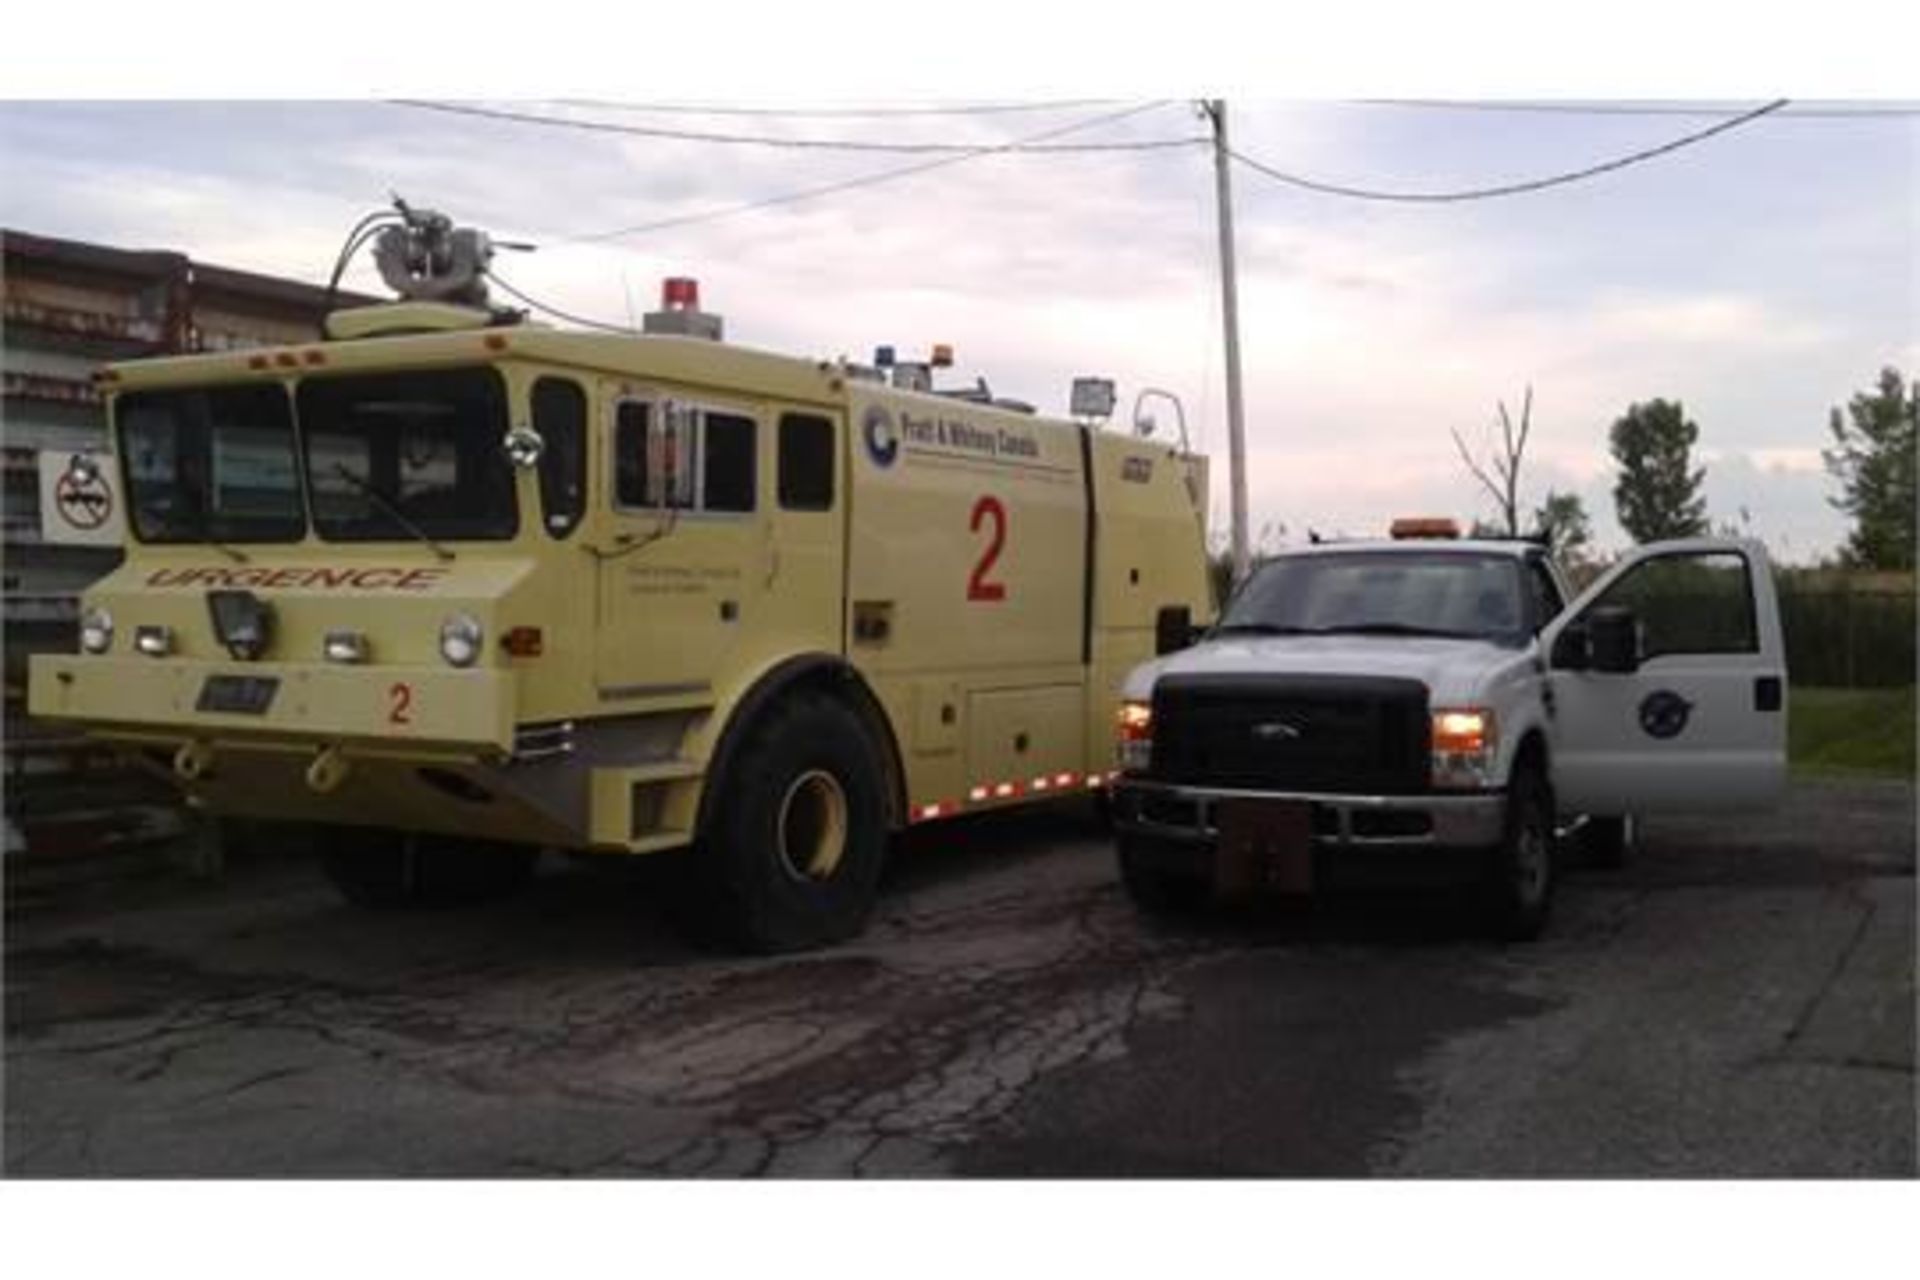 camion d incendie citerne a mousse - Foam boss fire truck - Image 2 of 3